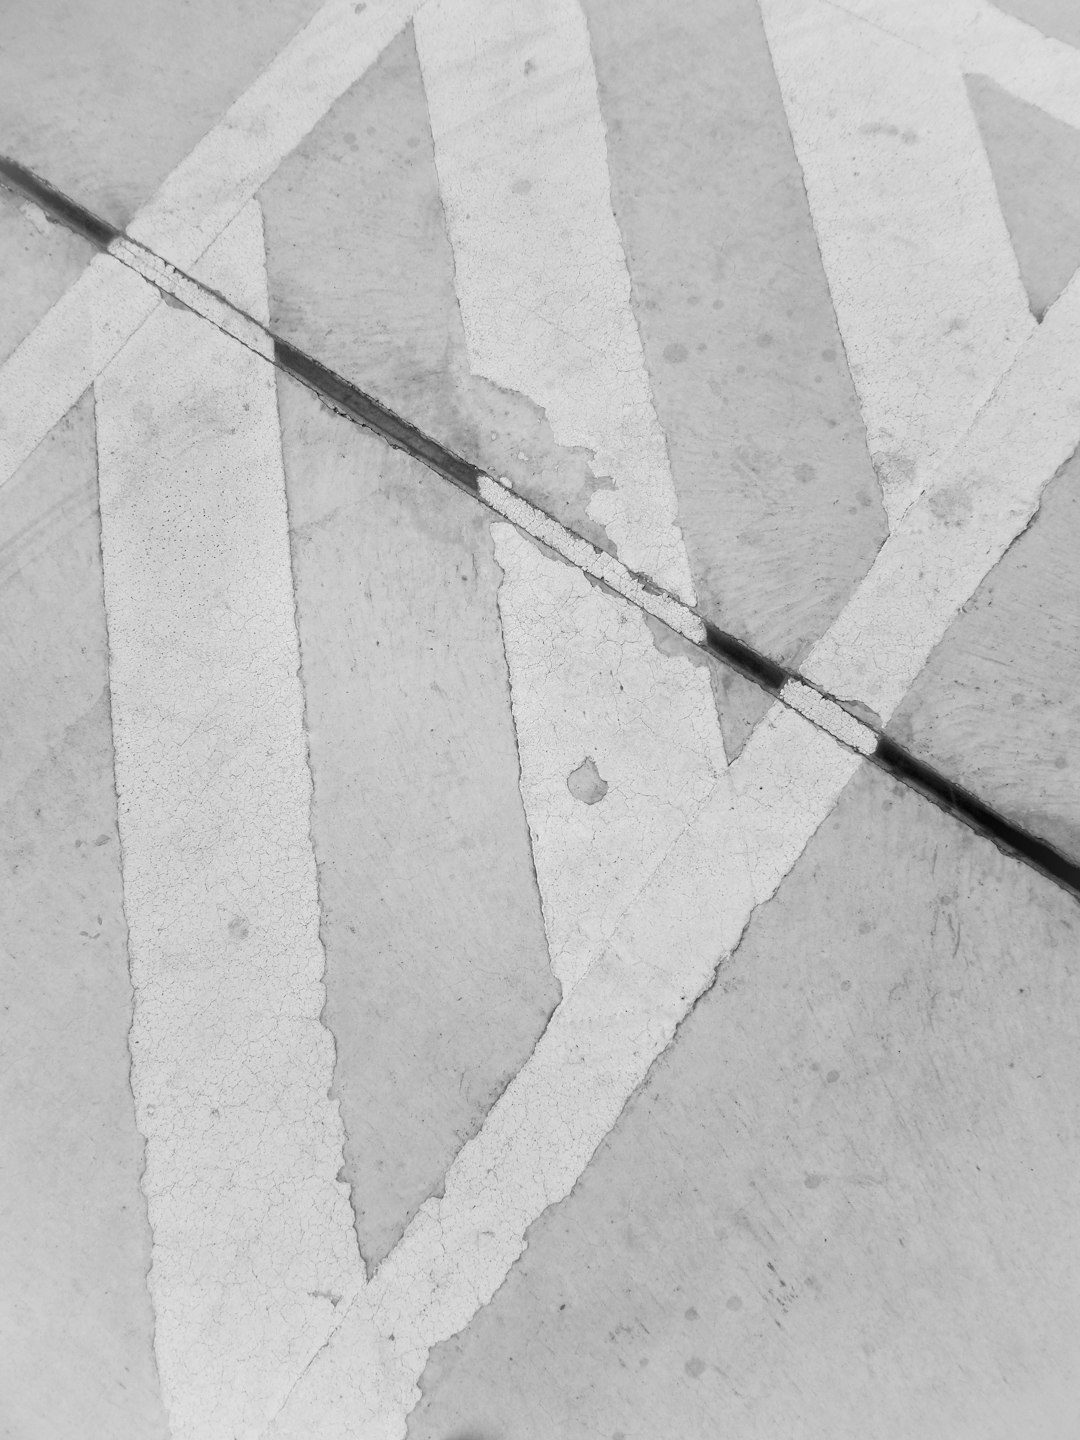 black and white walking stick on gray concrete floor